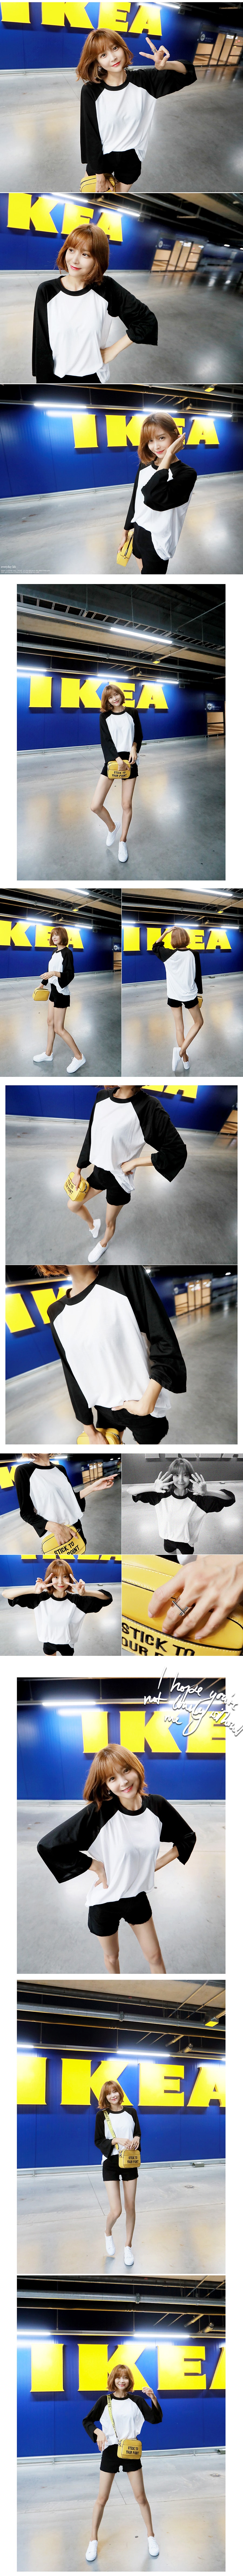 [Autumn New] Boxy Raglan T-Shirt #Black One Size(Free)